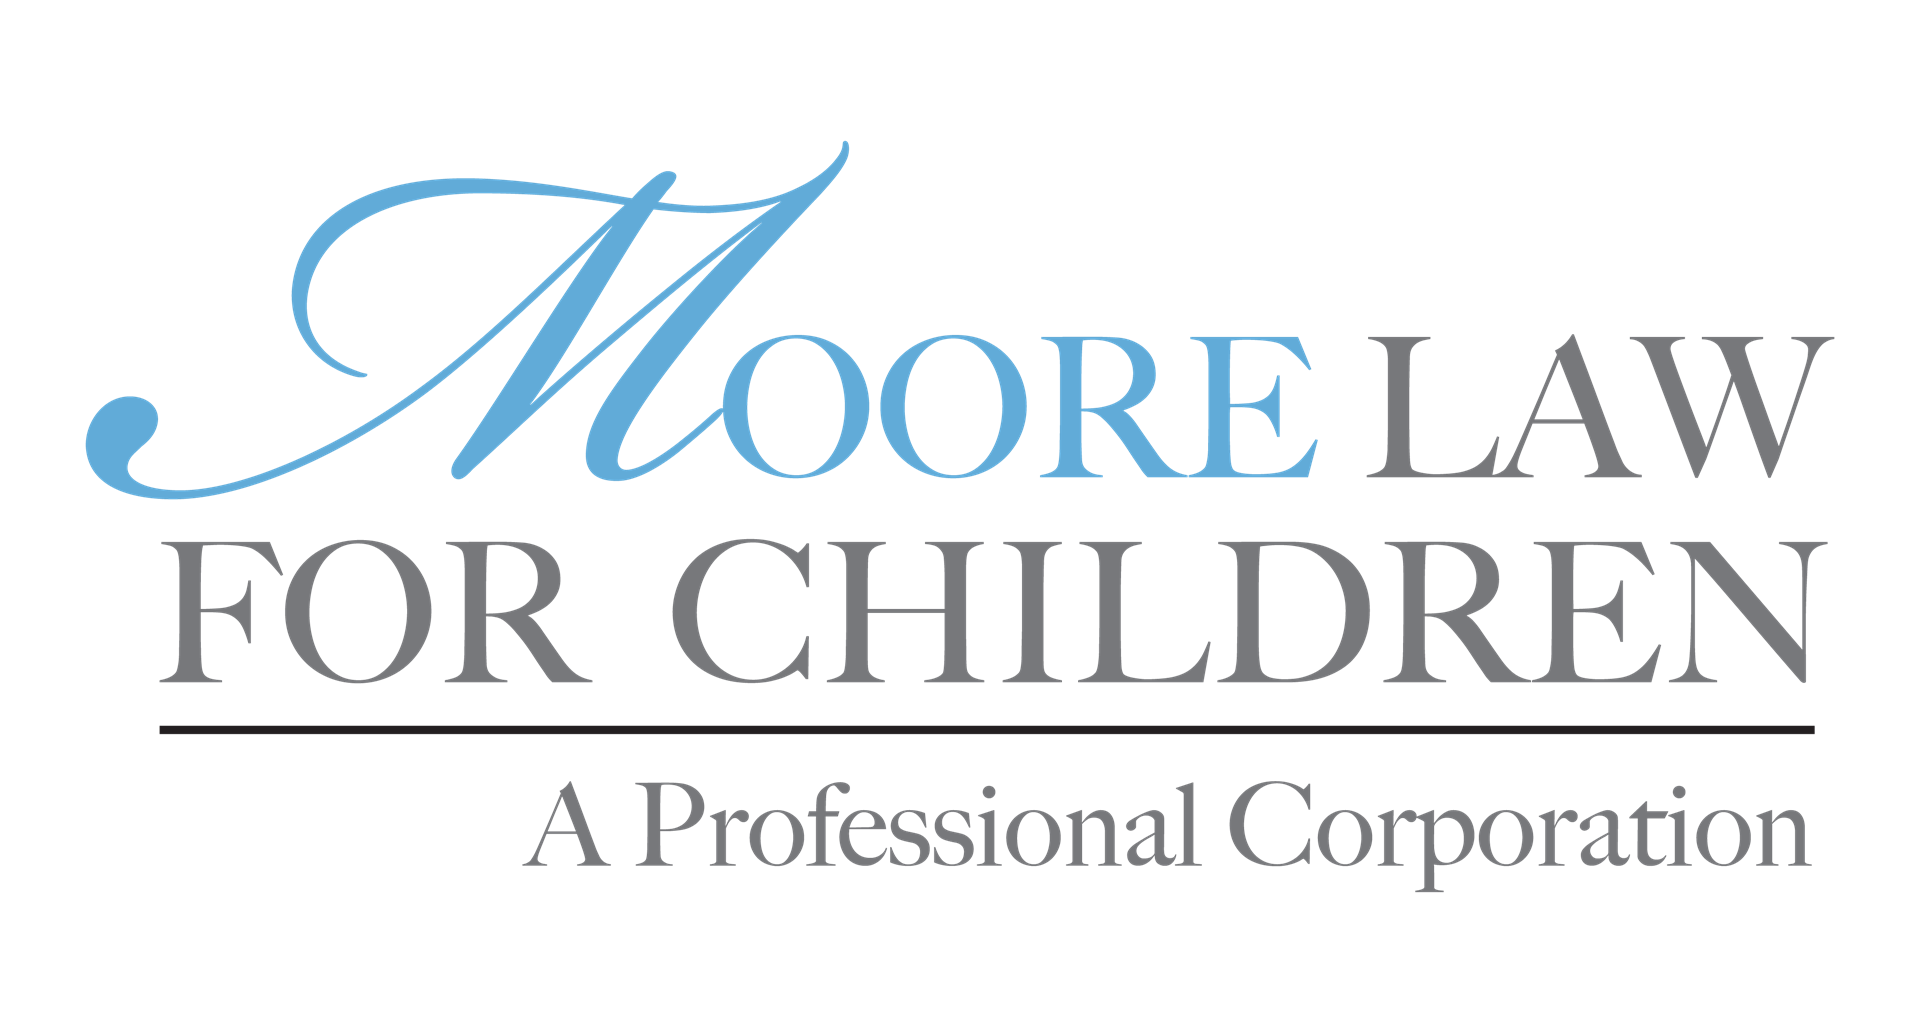 Moore Law For Children, APC